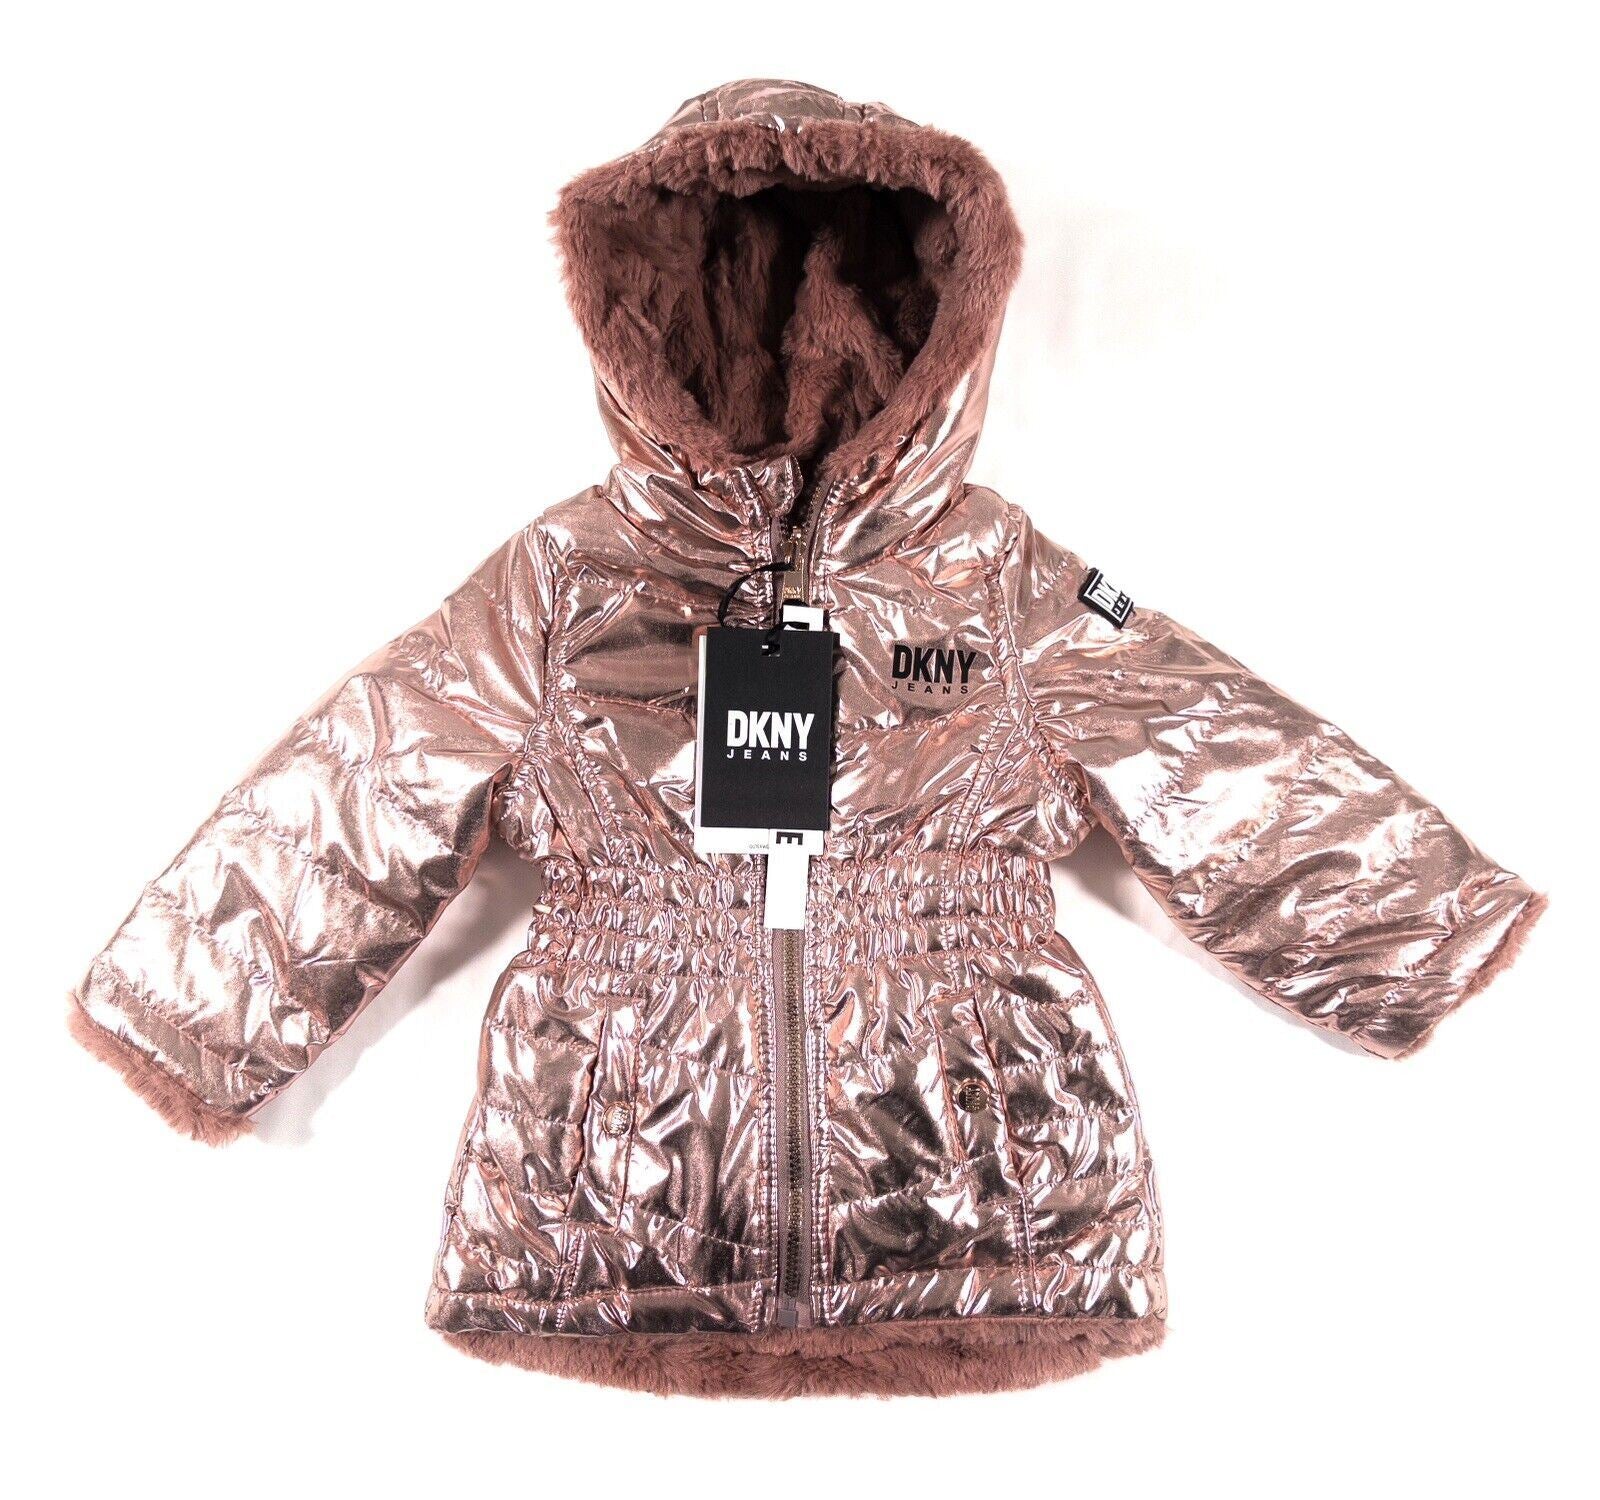 DKNY JEANS Infants Girls Reversible Coat Metallic Rose Gold Blush Size UK 18m